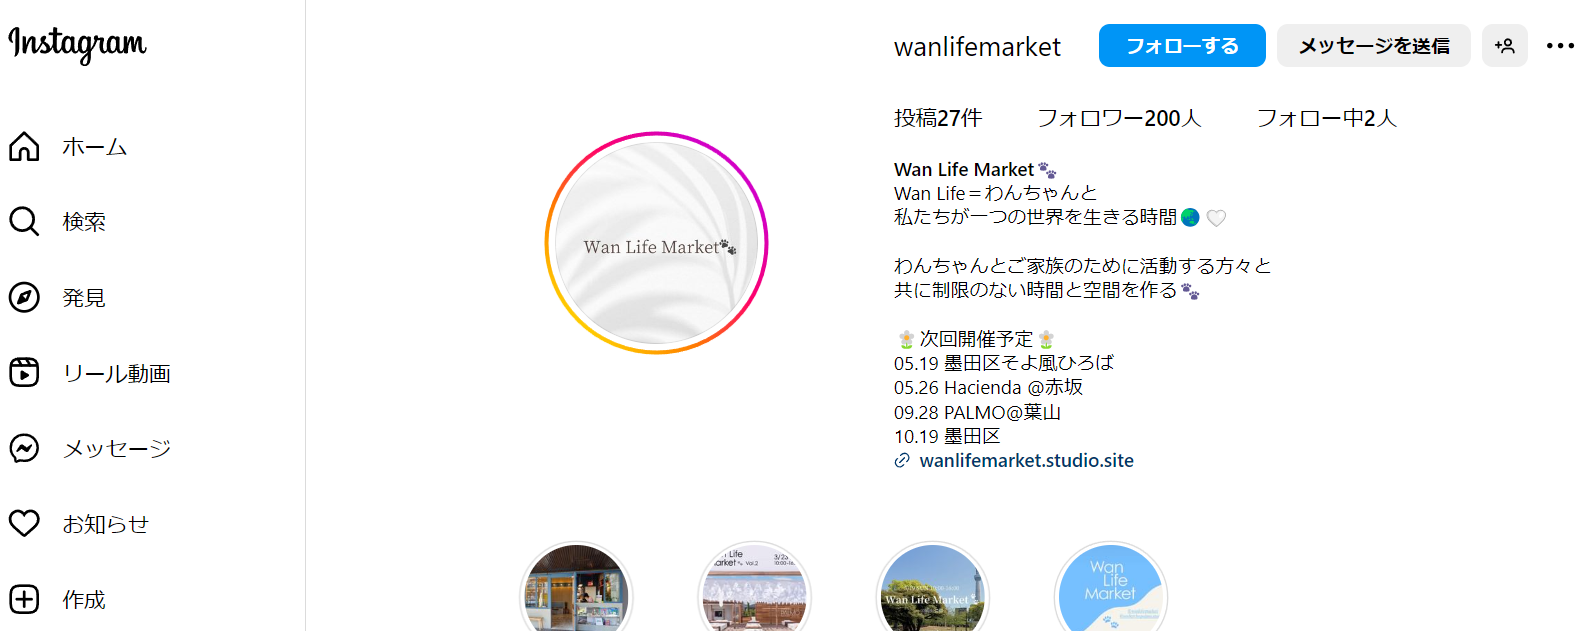 Wan Life Market